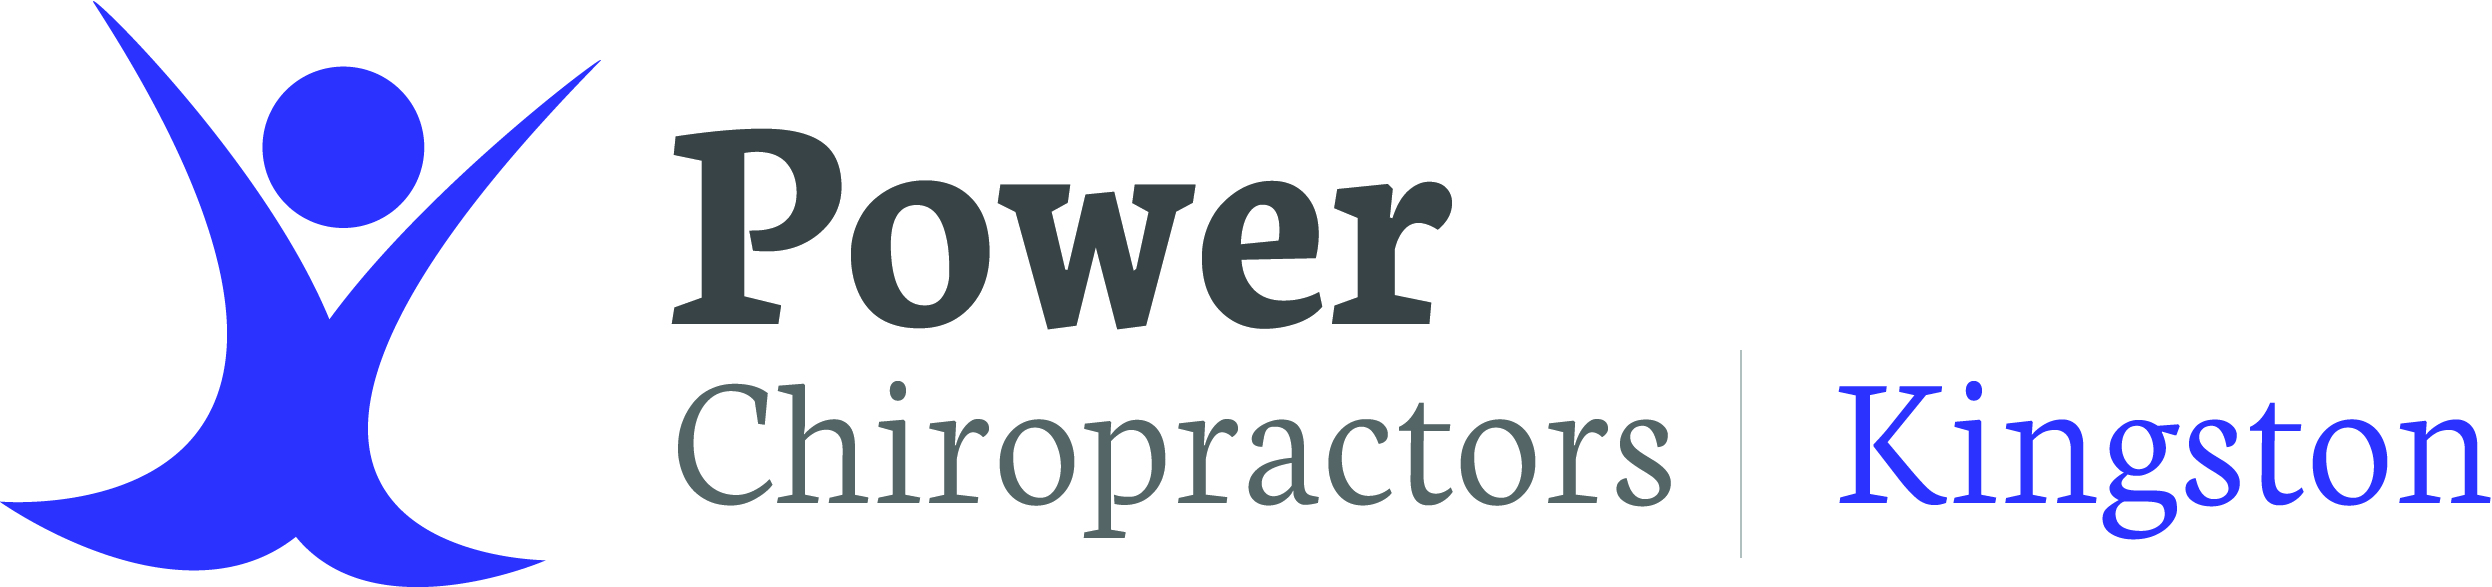 Power Chiropractors at Kingston Health & Wellness Centre, David Lloyd Kingston, Kingston Upon Thames, London